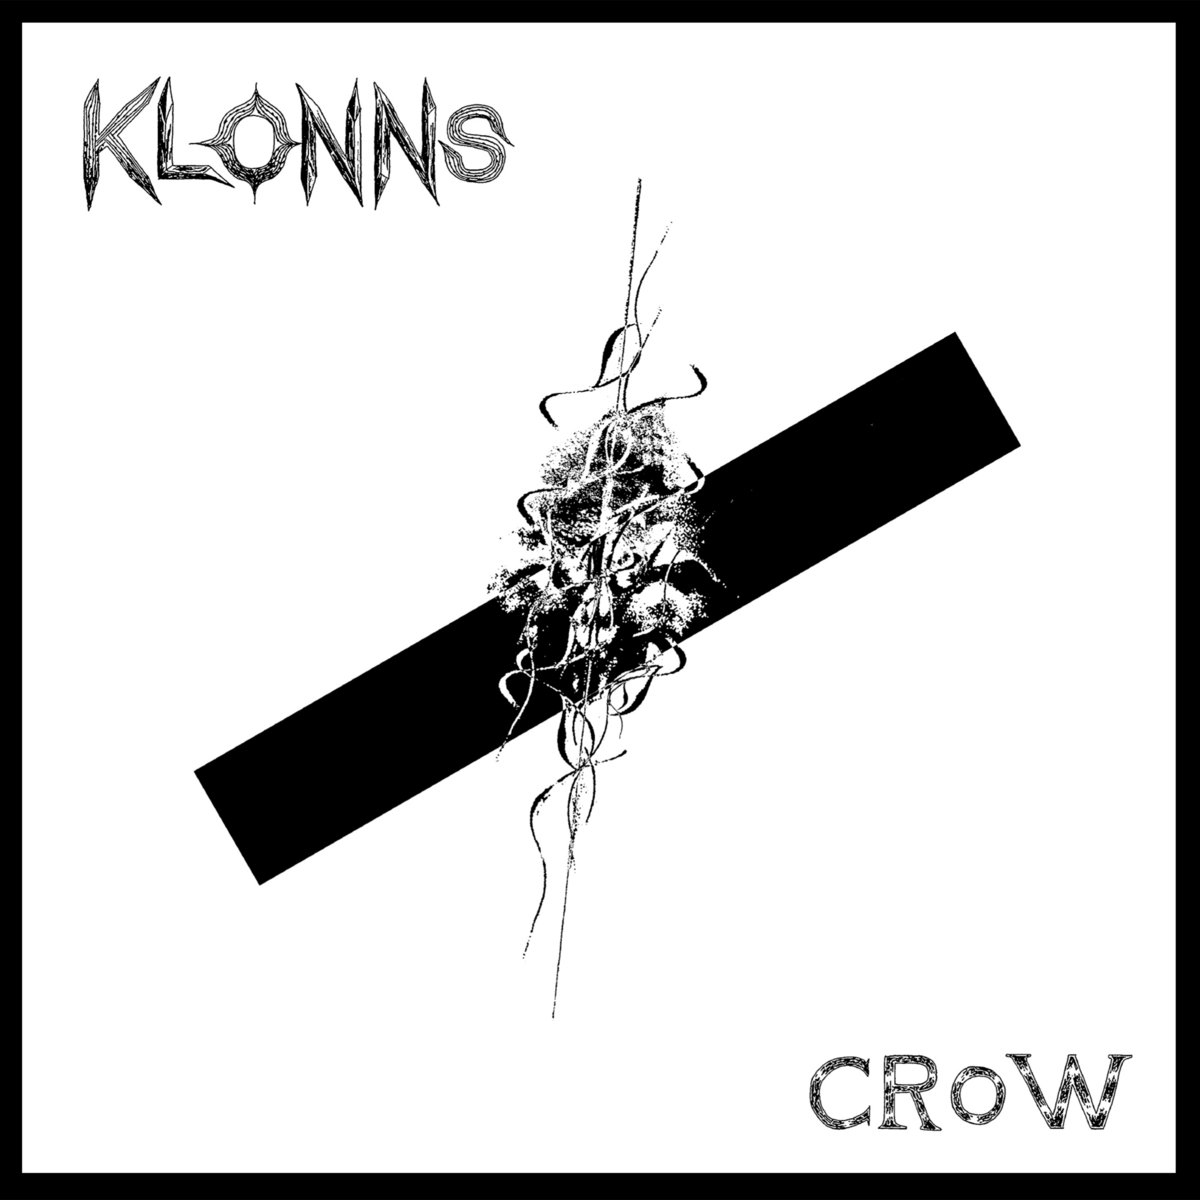 KLONNS 'CROW'